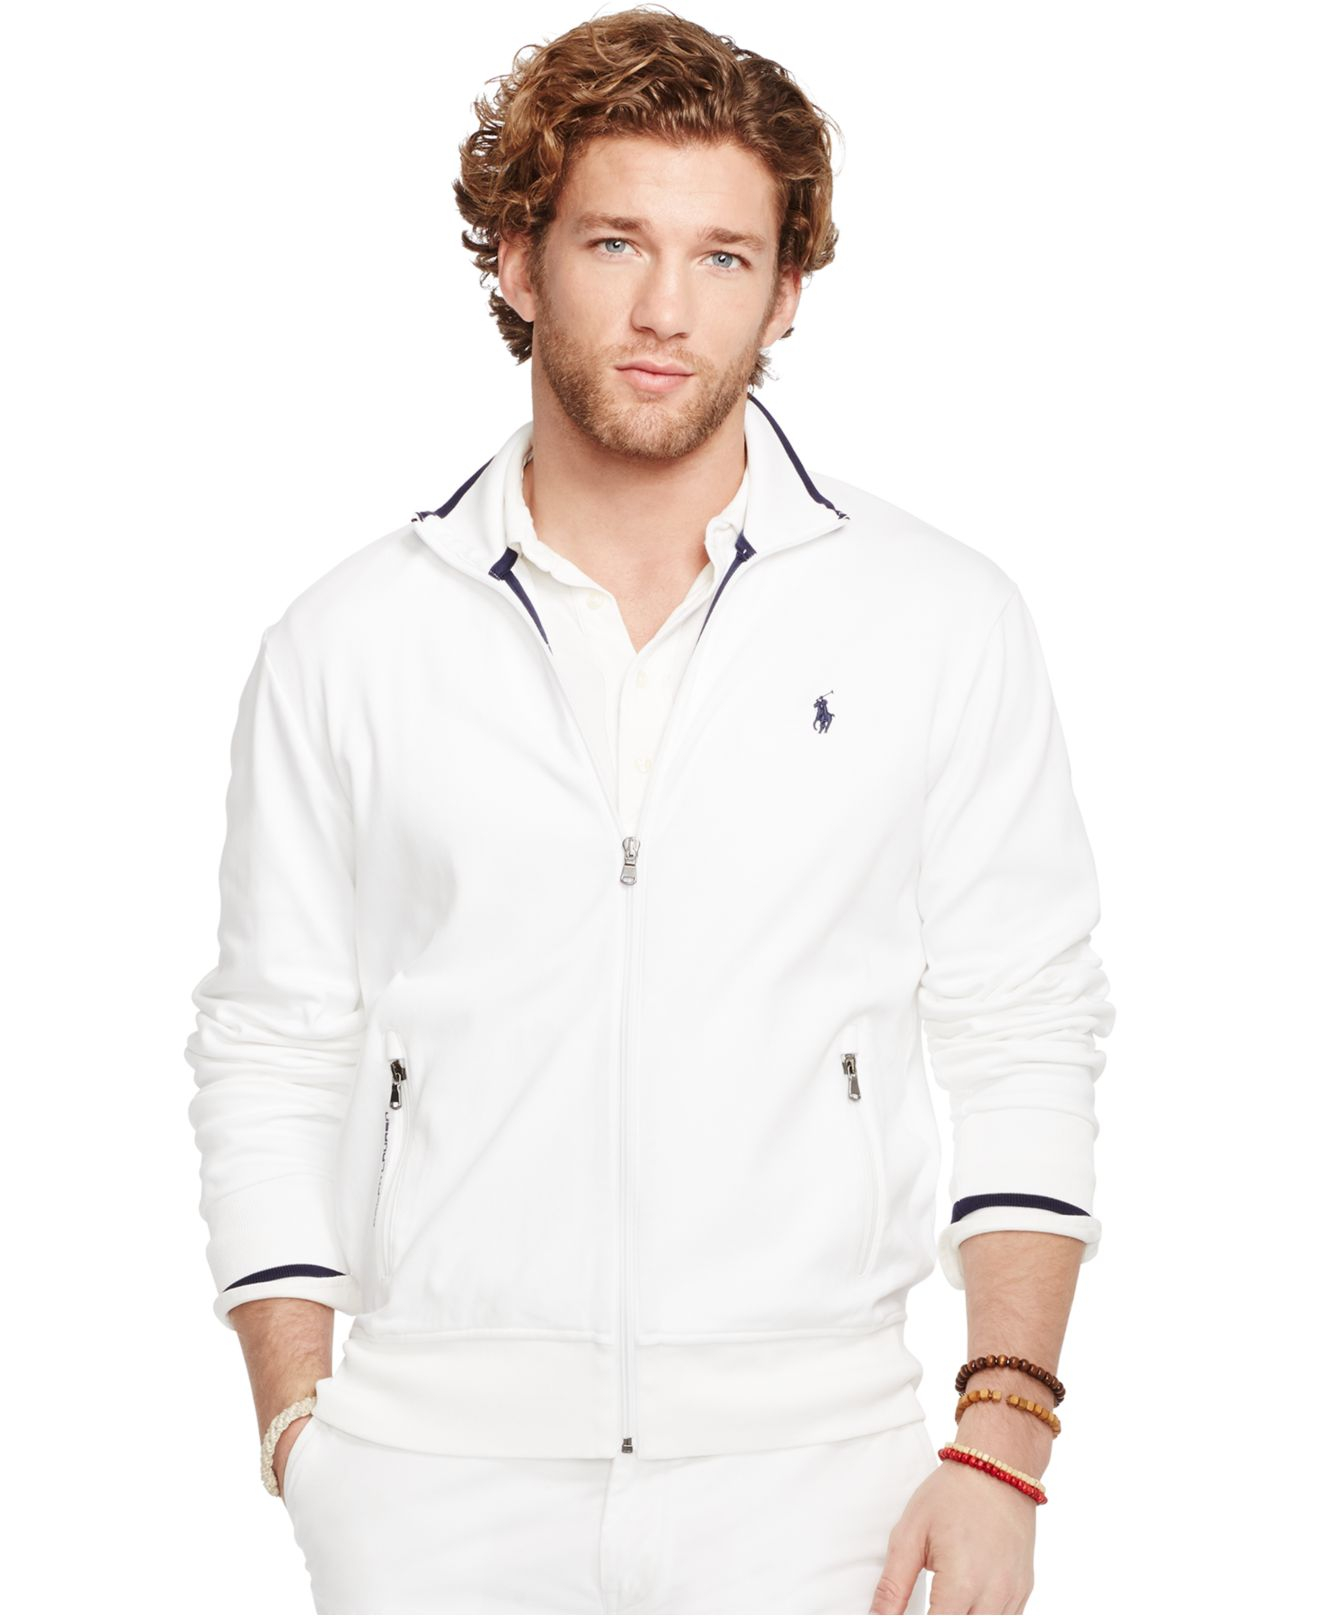 Download Lyst - Polo Ralph Lauren Full-Zip Track Jacket in White ...